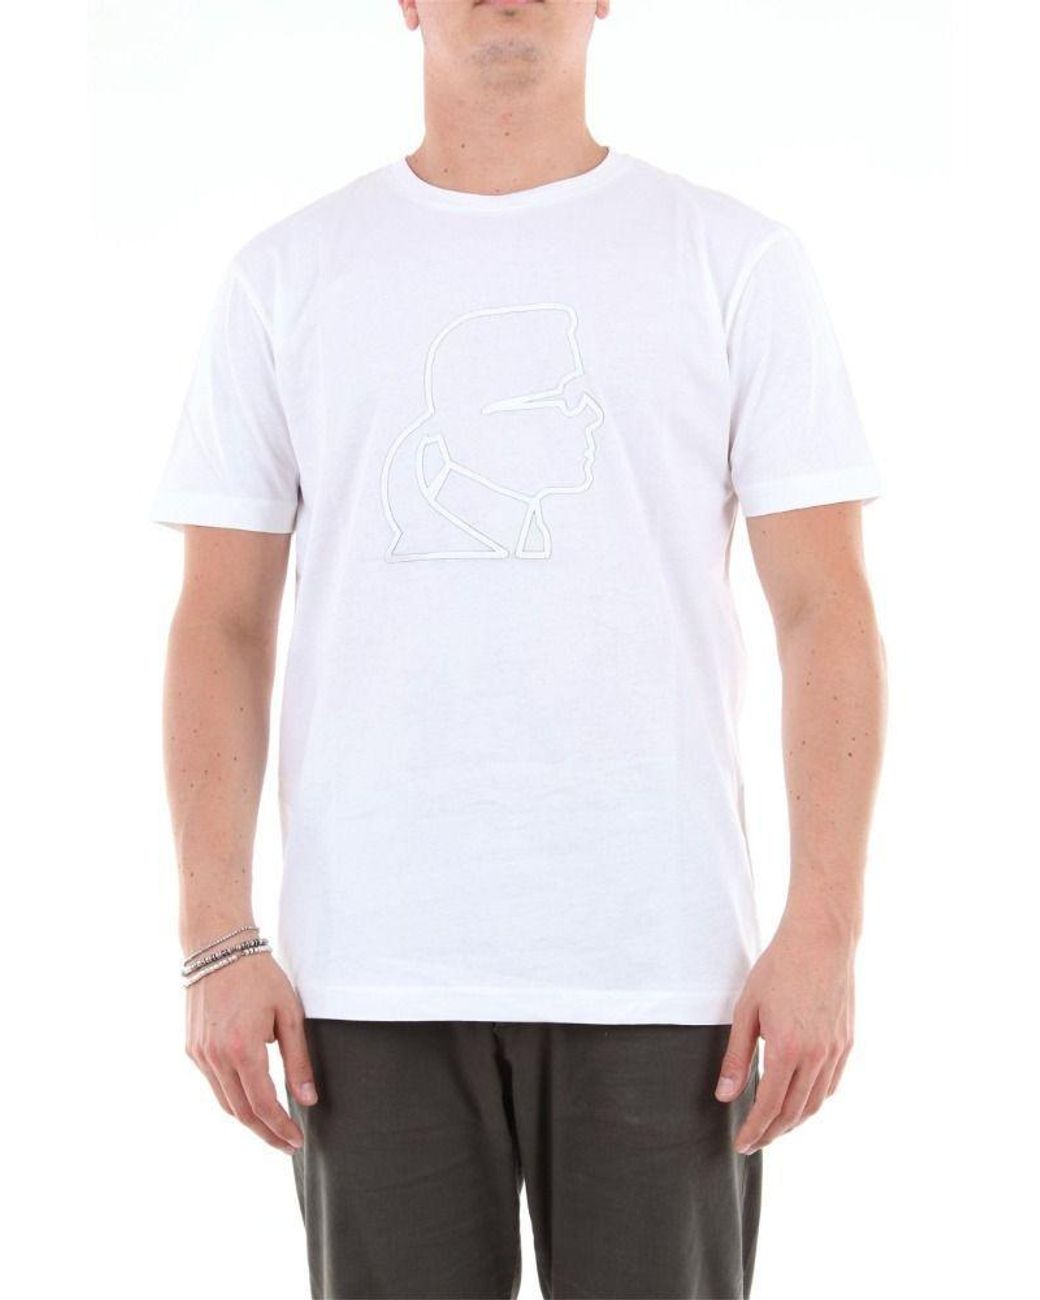 Karl Lagerfeld Cotton T-shirt in White for Men - Lyst